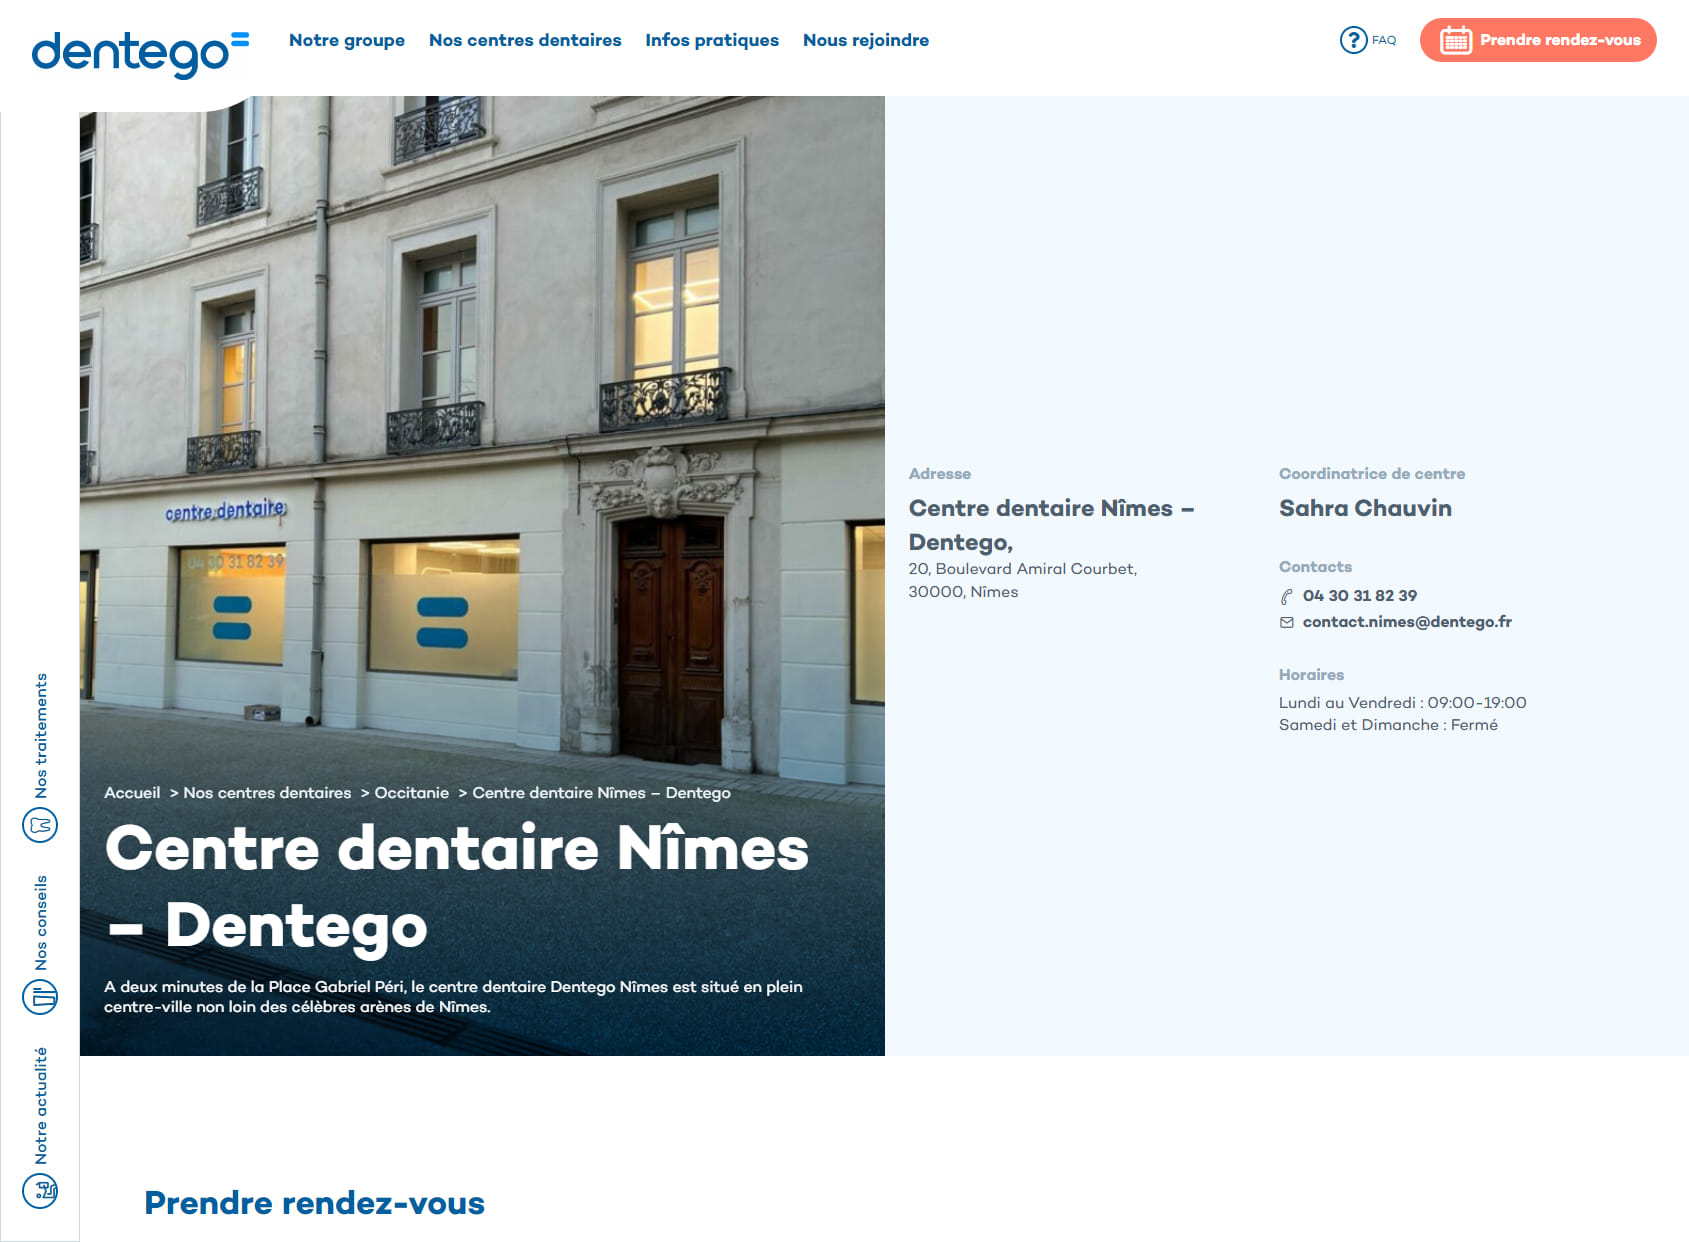 Centre Dentaire Nîmes : Dentiste Nîmes - Dentego